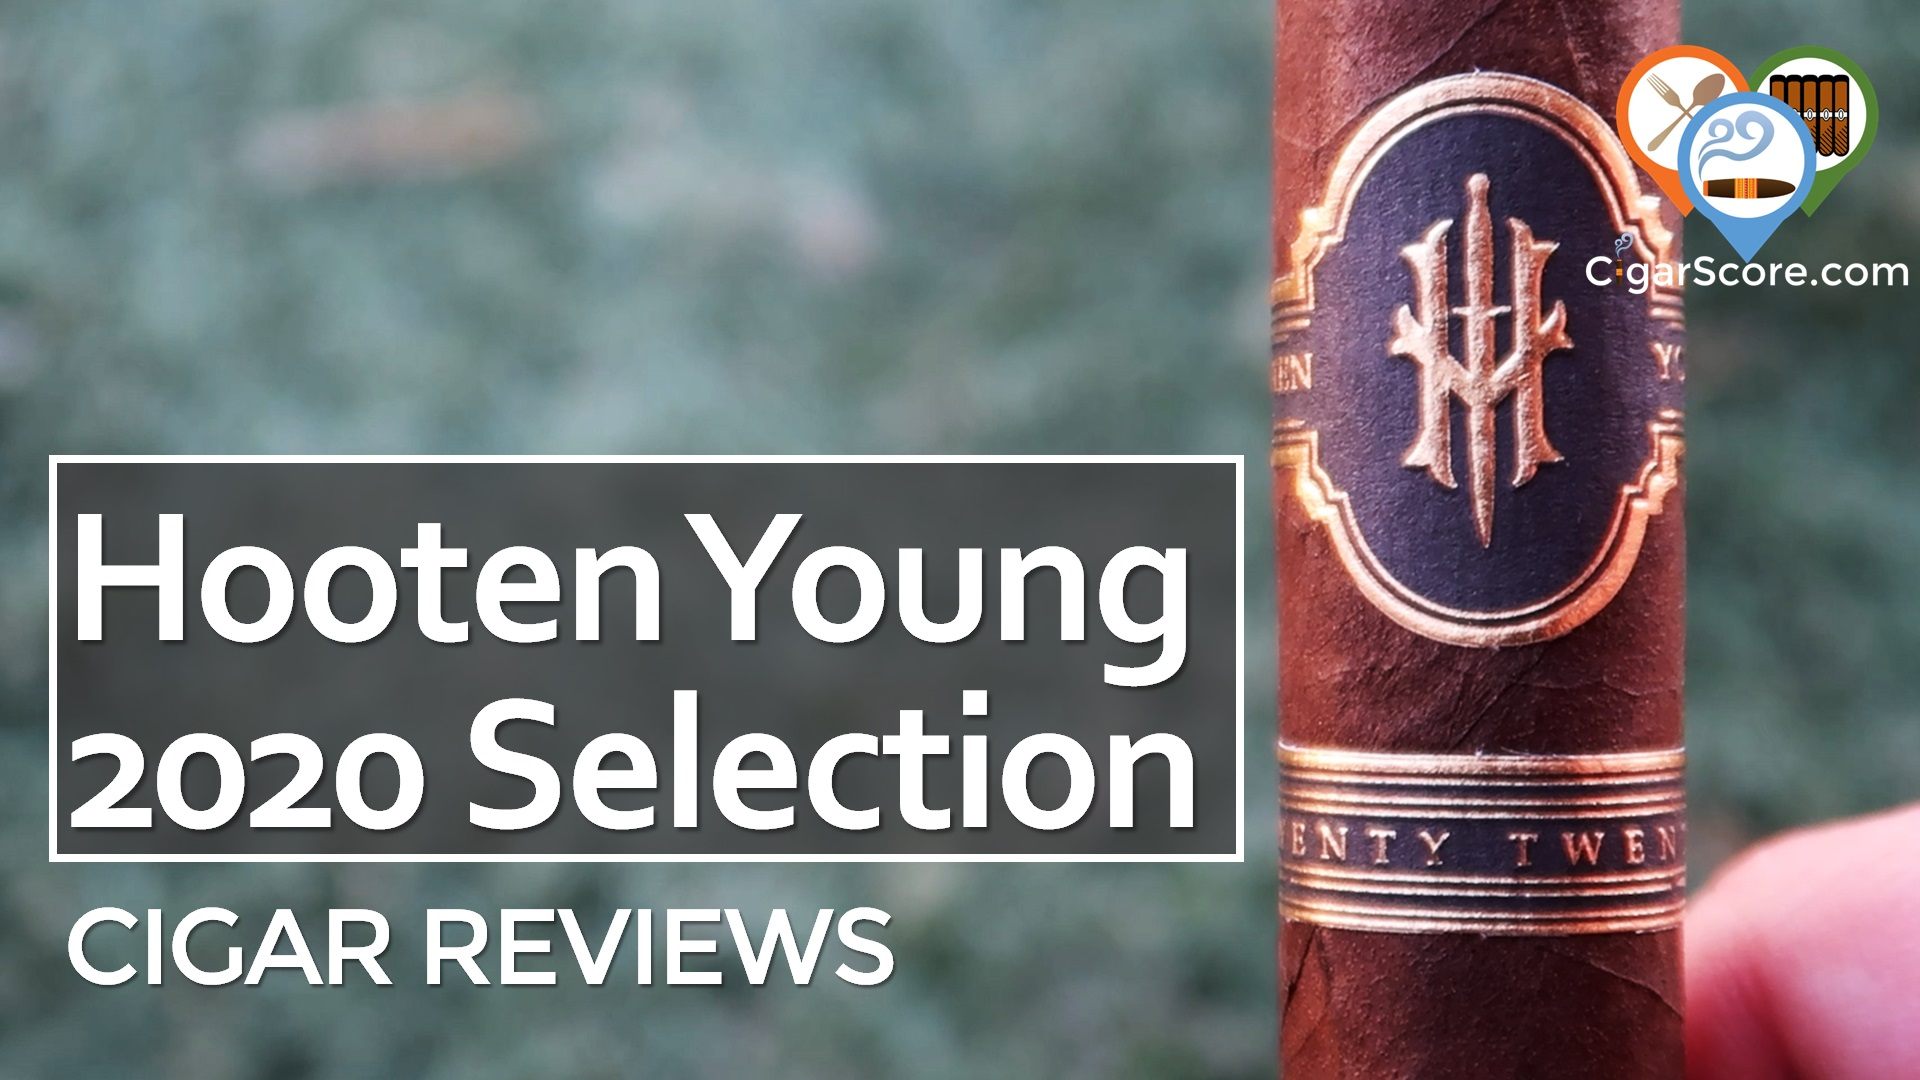 Cigar Review: Hooten Young 2020 Selection